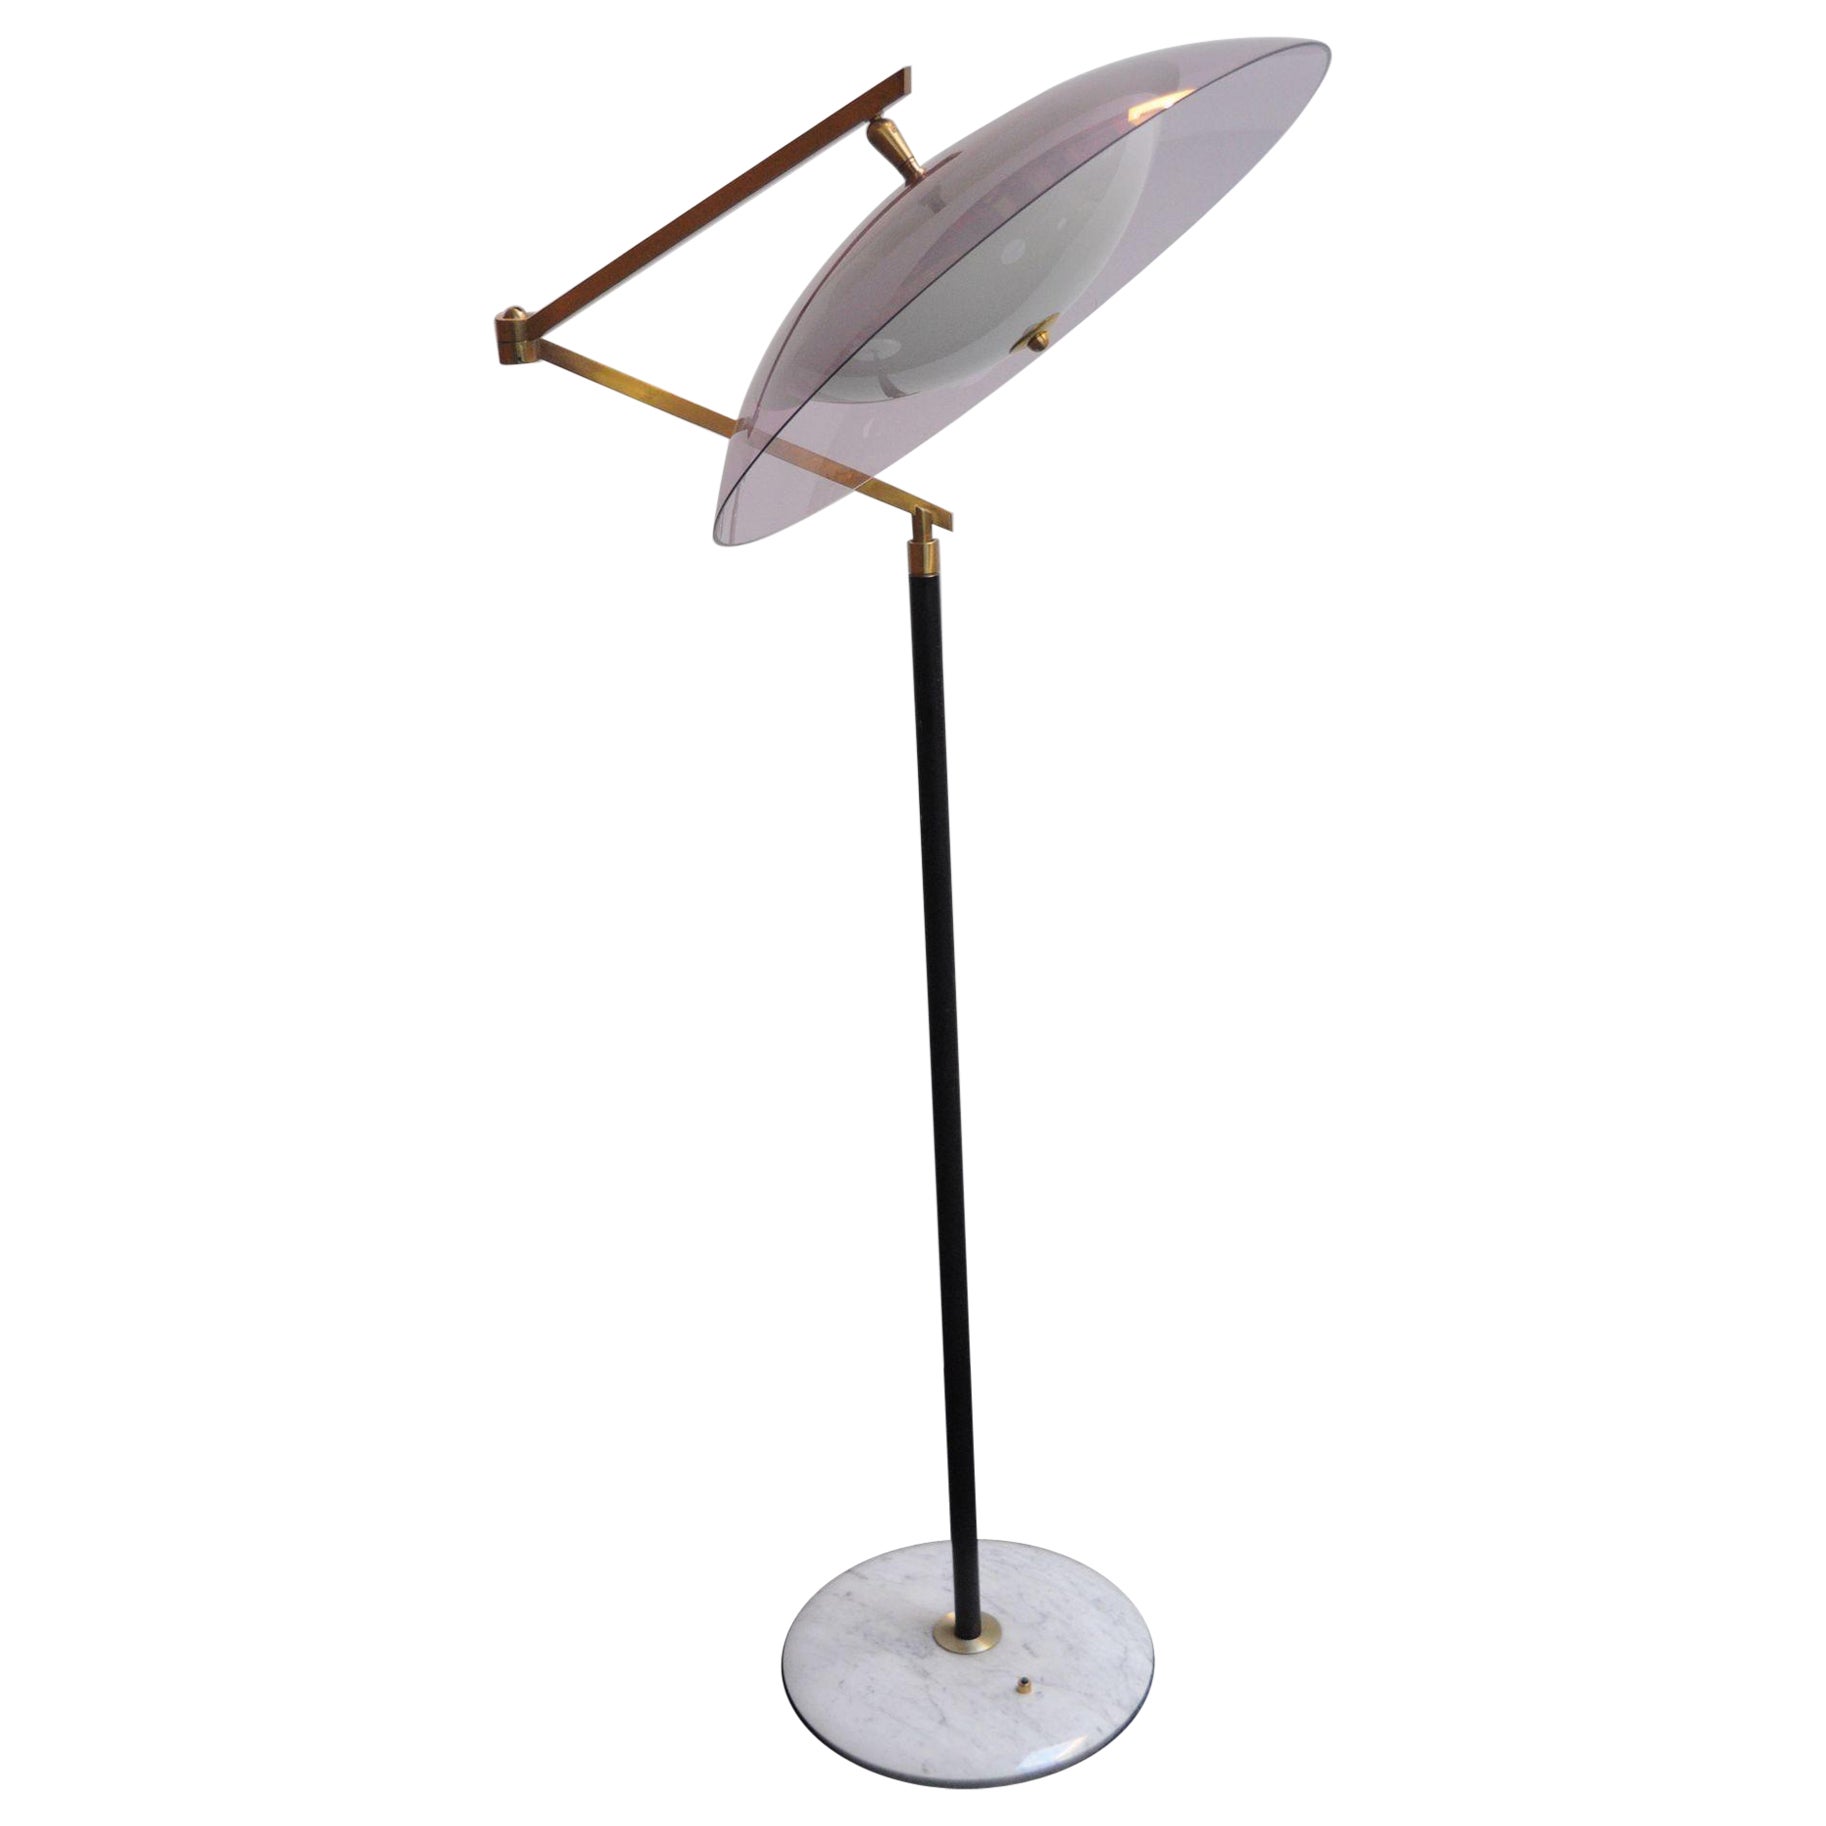 Italian Modernist "Orléans" Brass and Acrylic Adjustable Floor Lamp by Stilux For Sale